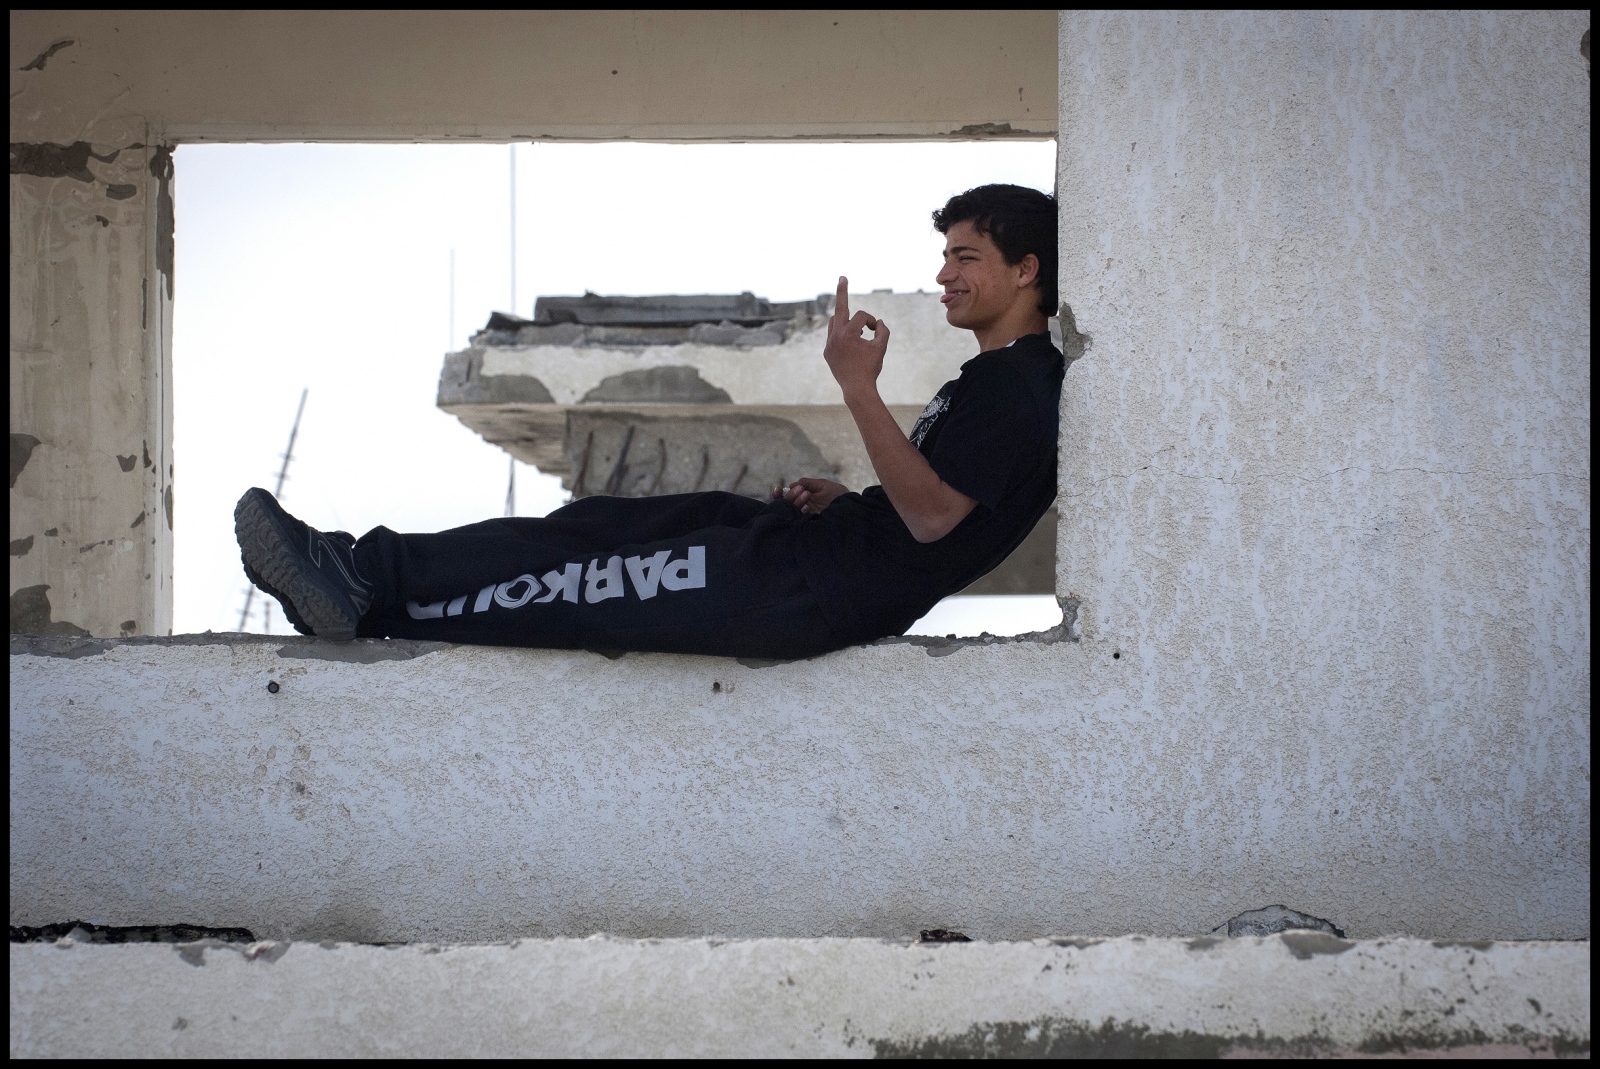 Parkour in the Gaza Strip.